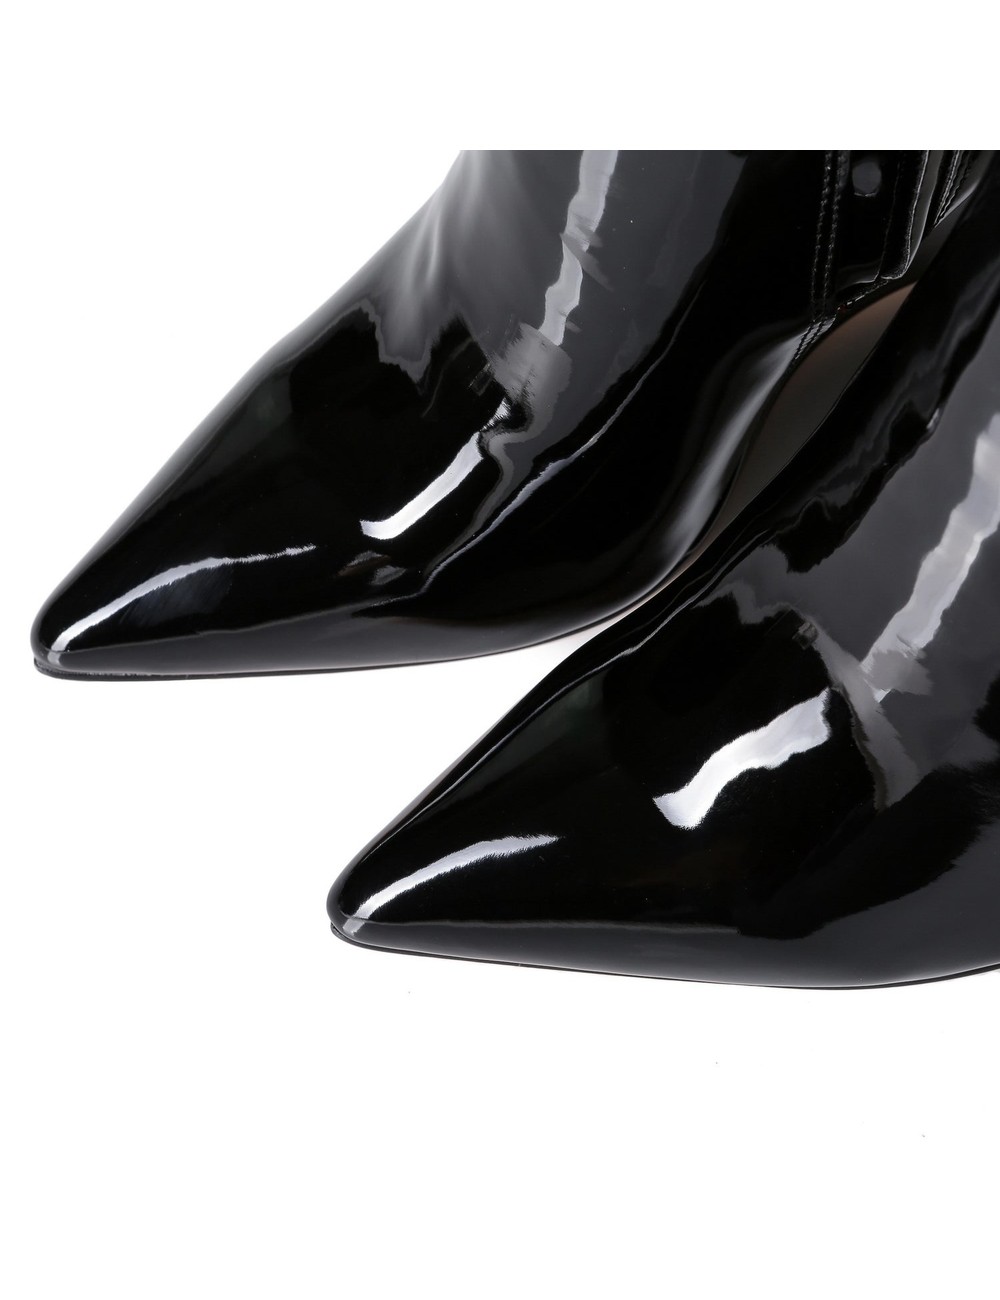 Giaro Giaro Kniestiefel mit Keilabsatz ELLA in schwarz glänzend